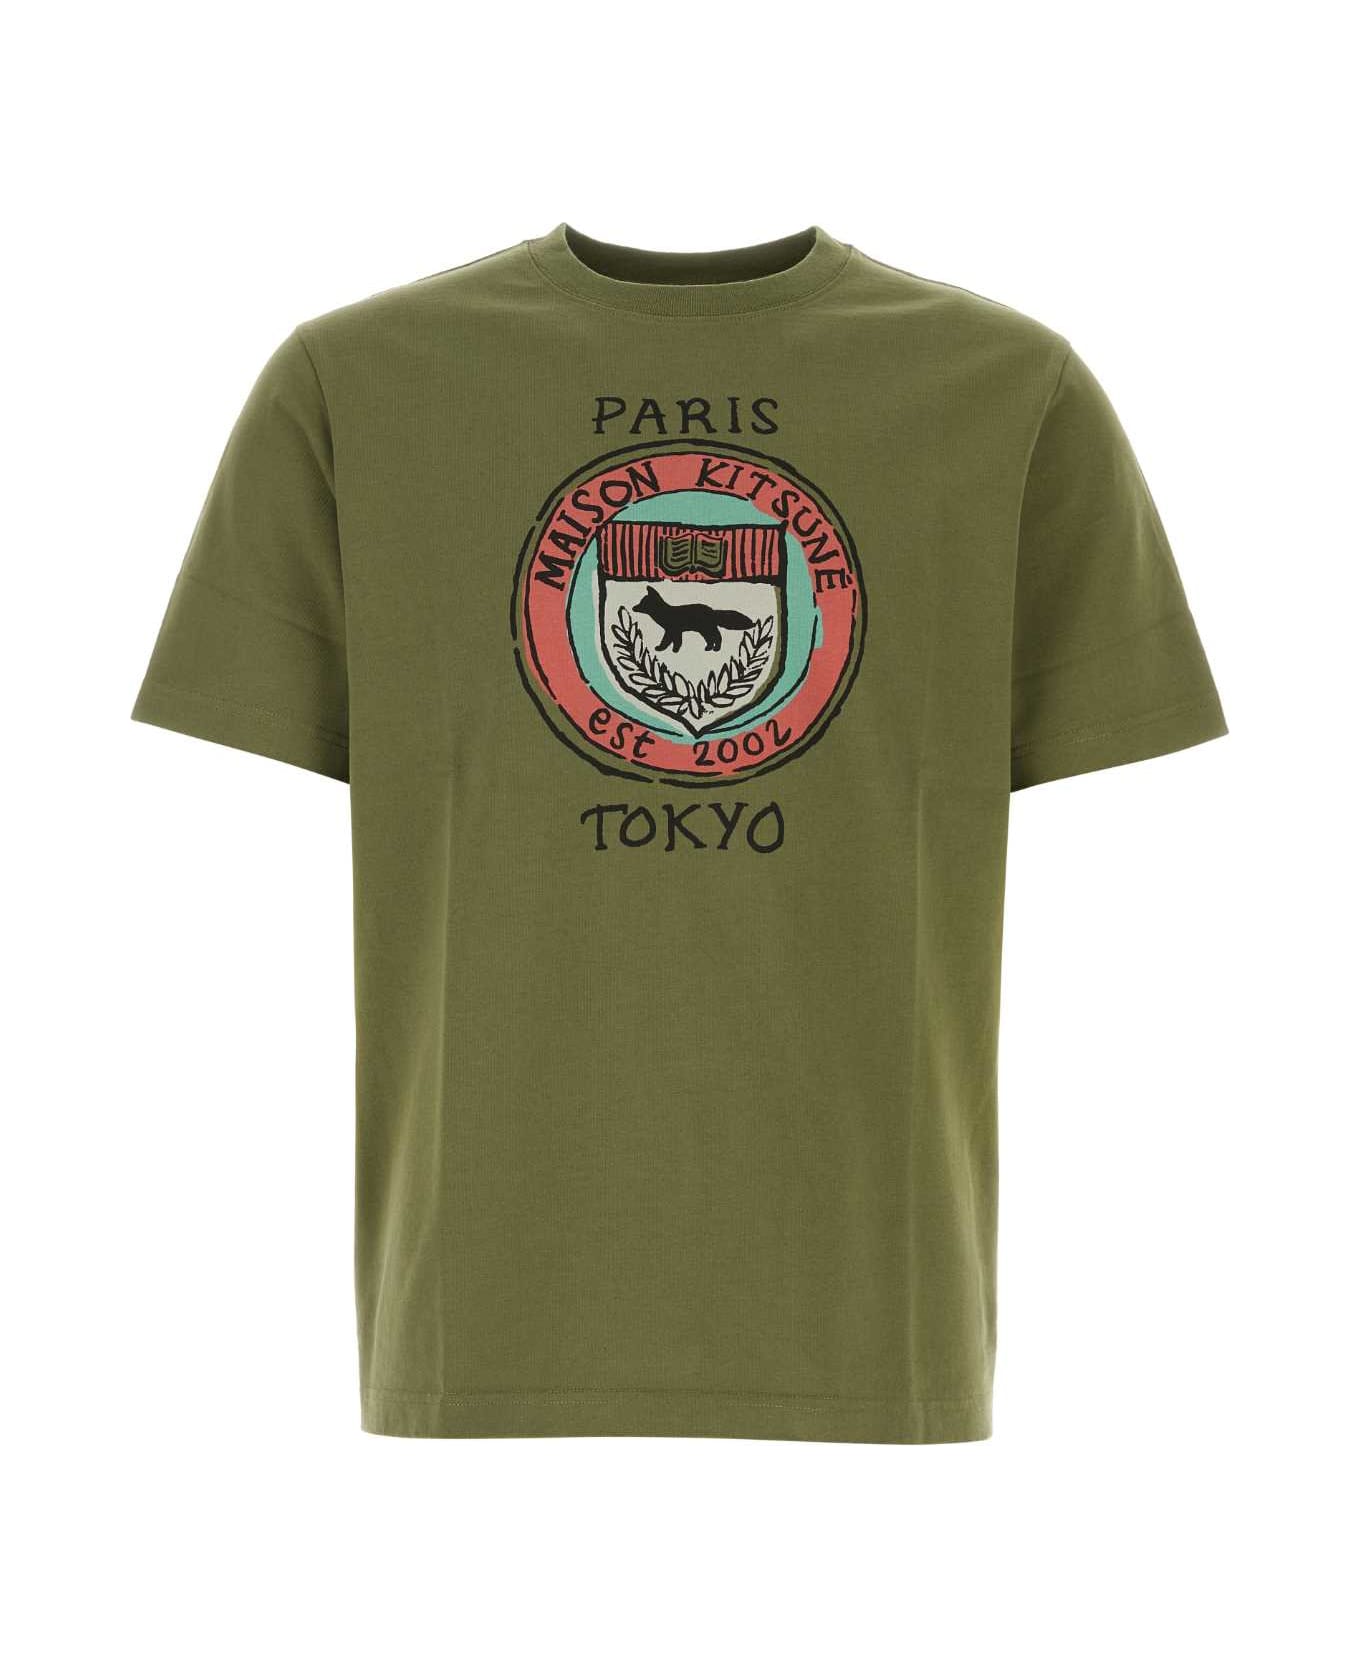 Maison Kitsuné Army Green Cotton T-shirt - MILITARYGREEN